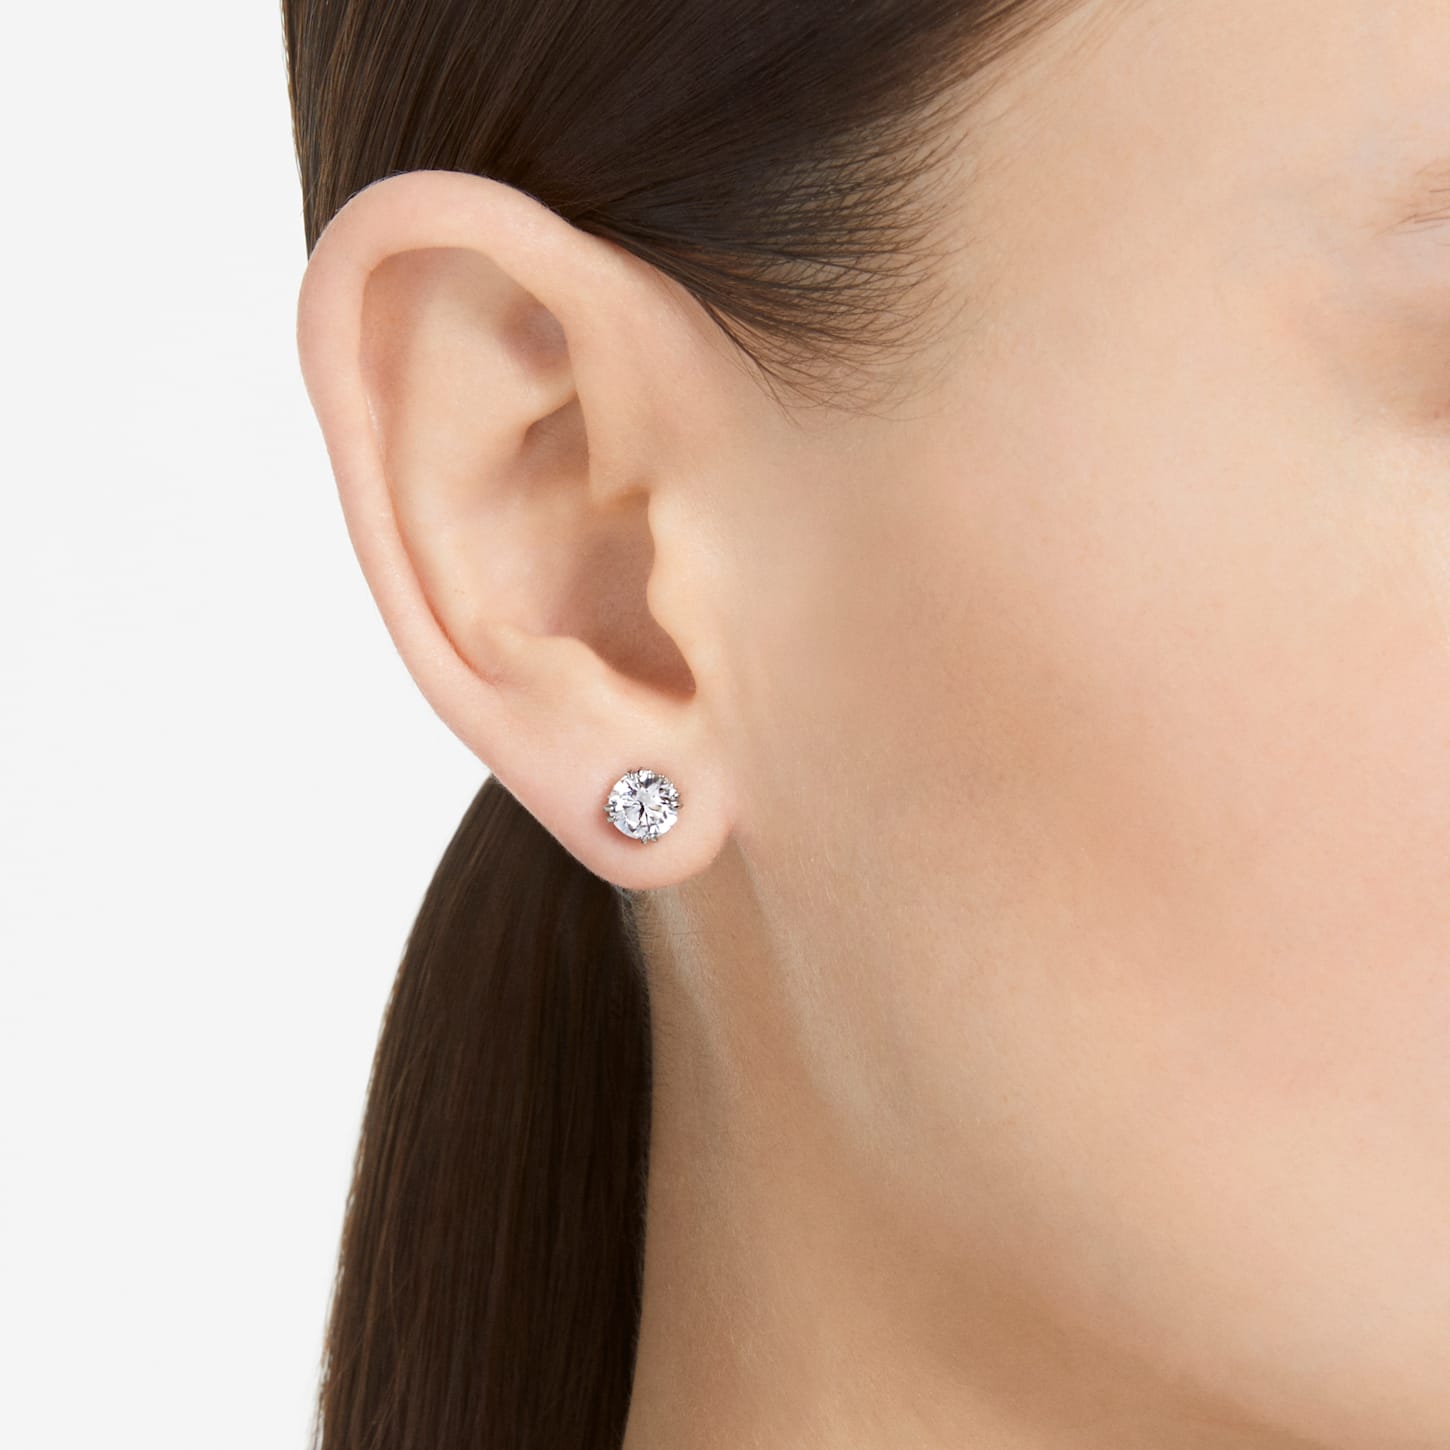 Constella - White Silver - Stud earrings - Swarovski